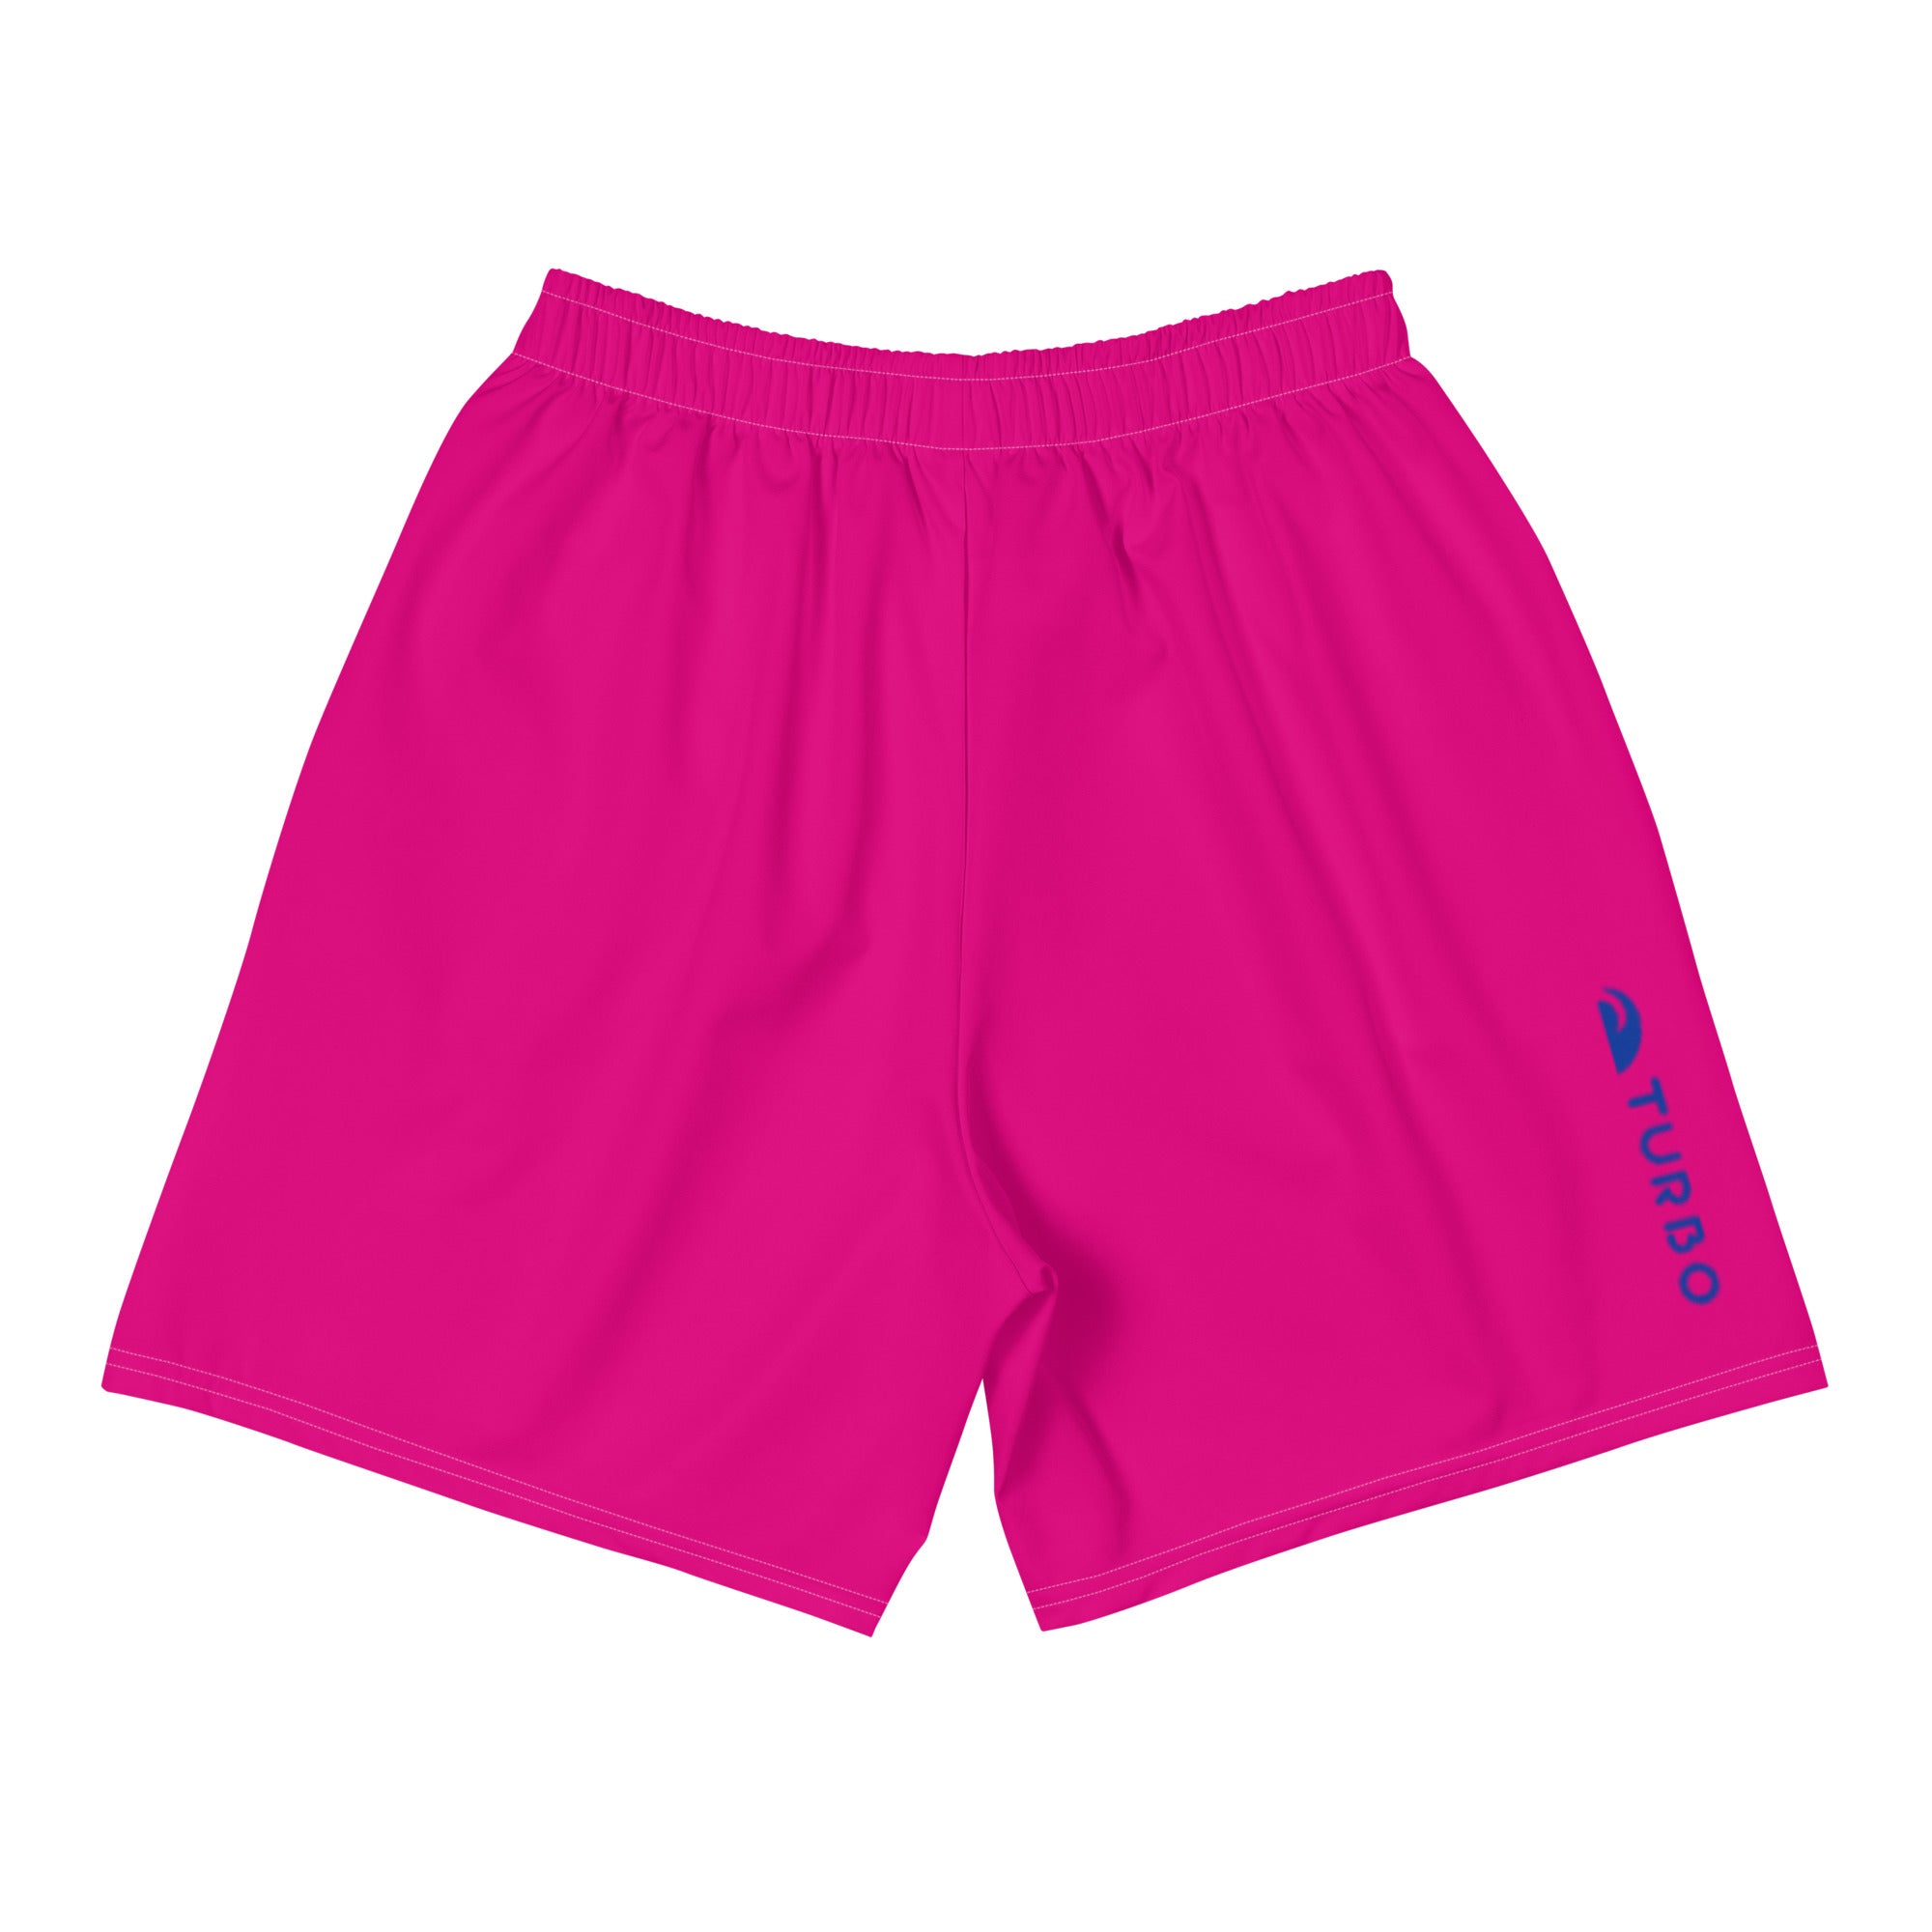 Athletic Men's Shorts Pink